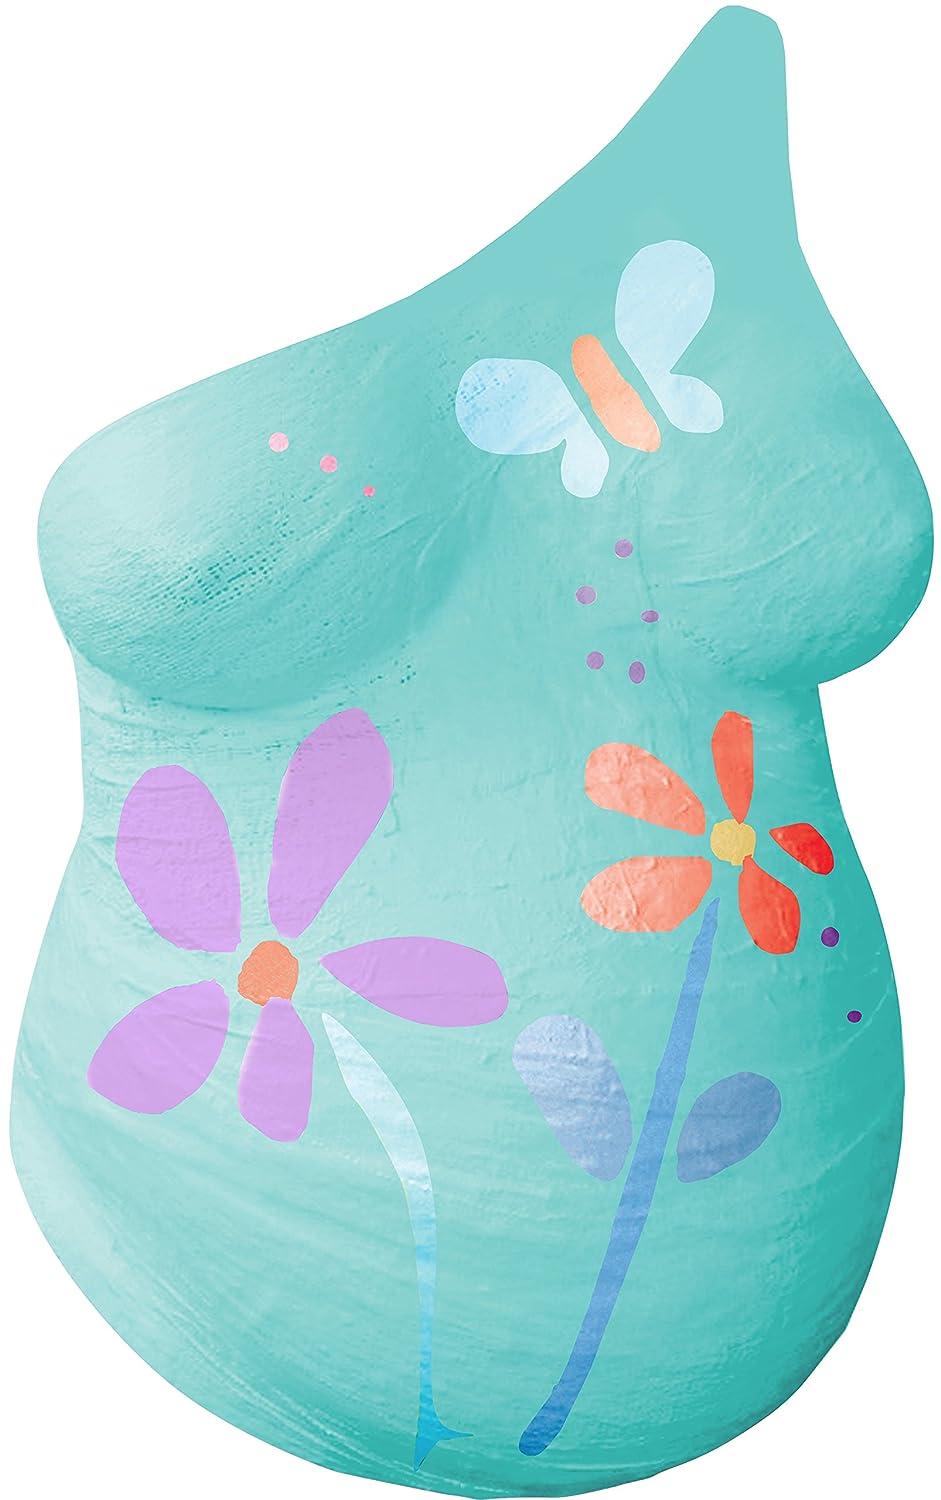 Pearhead Belly Casting Kit Expecting Mom Pregnancy Keepsake Pregnant Belly  Ke